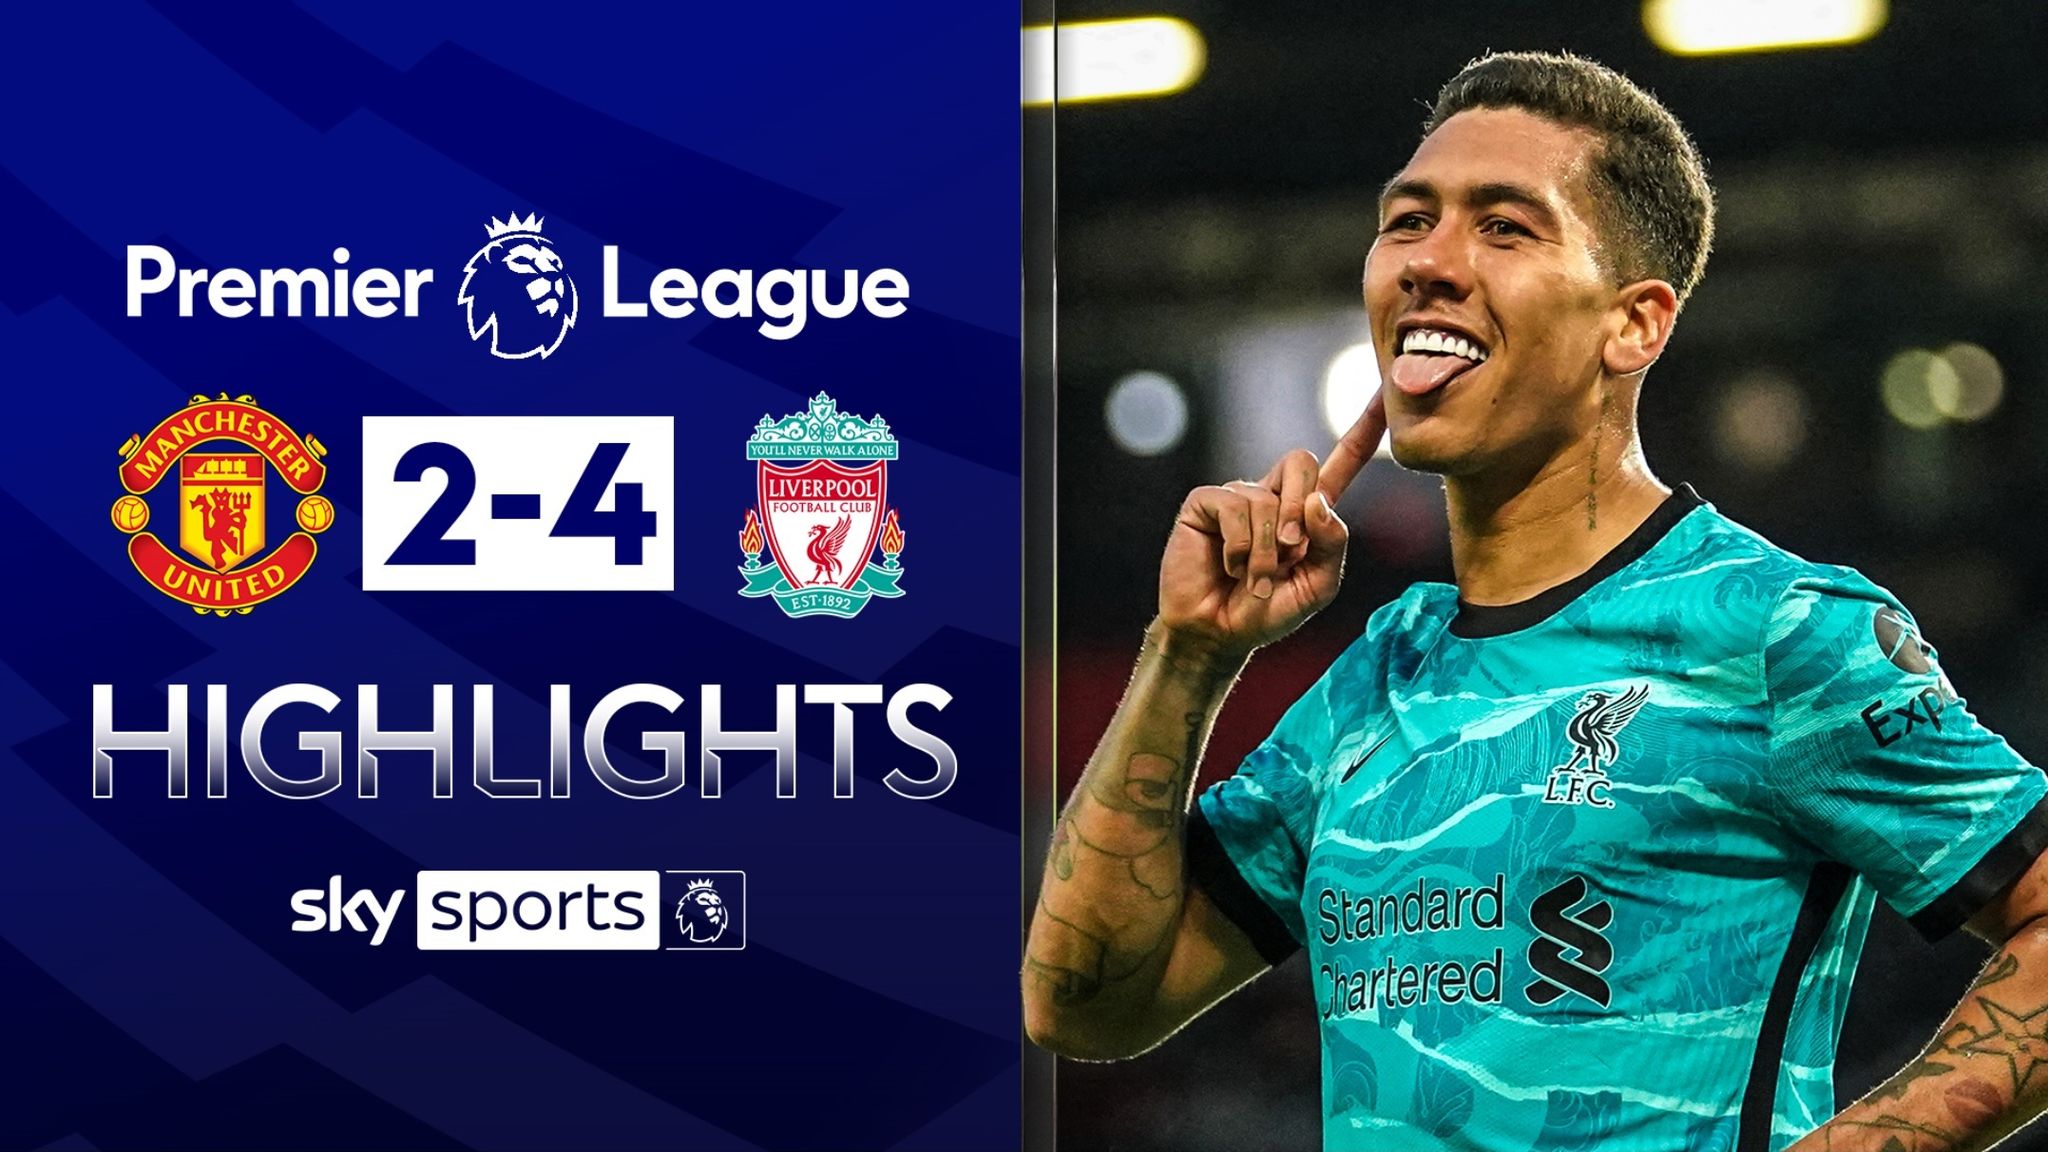 Man Utd 2 - 4 Liverpool - Match Report & Highlights